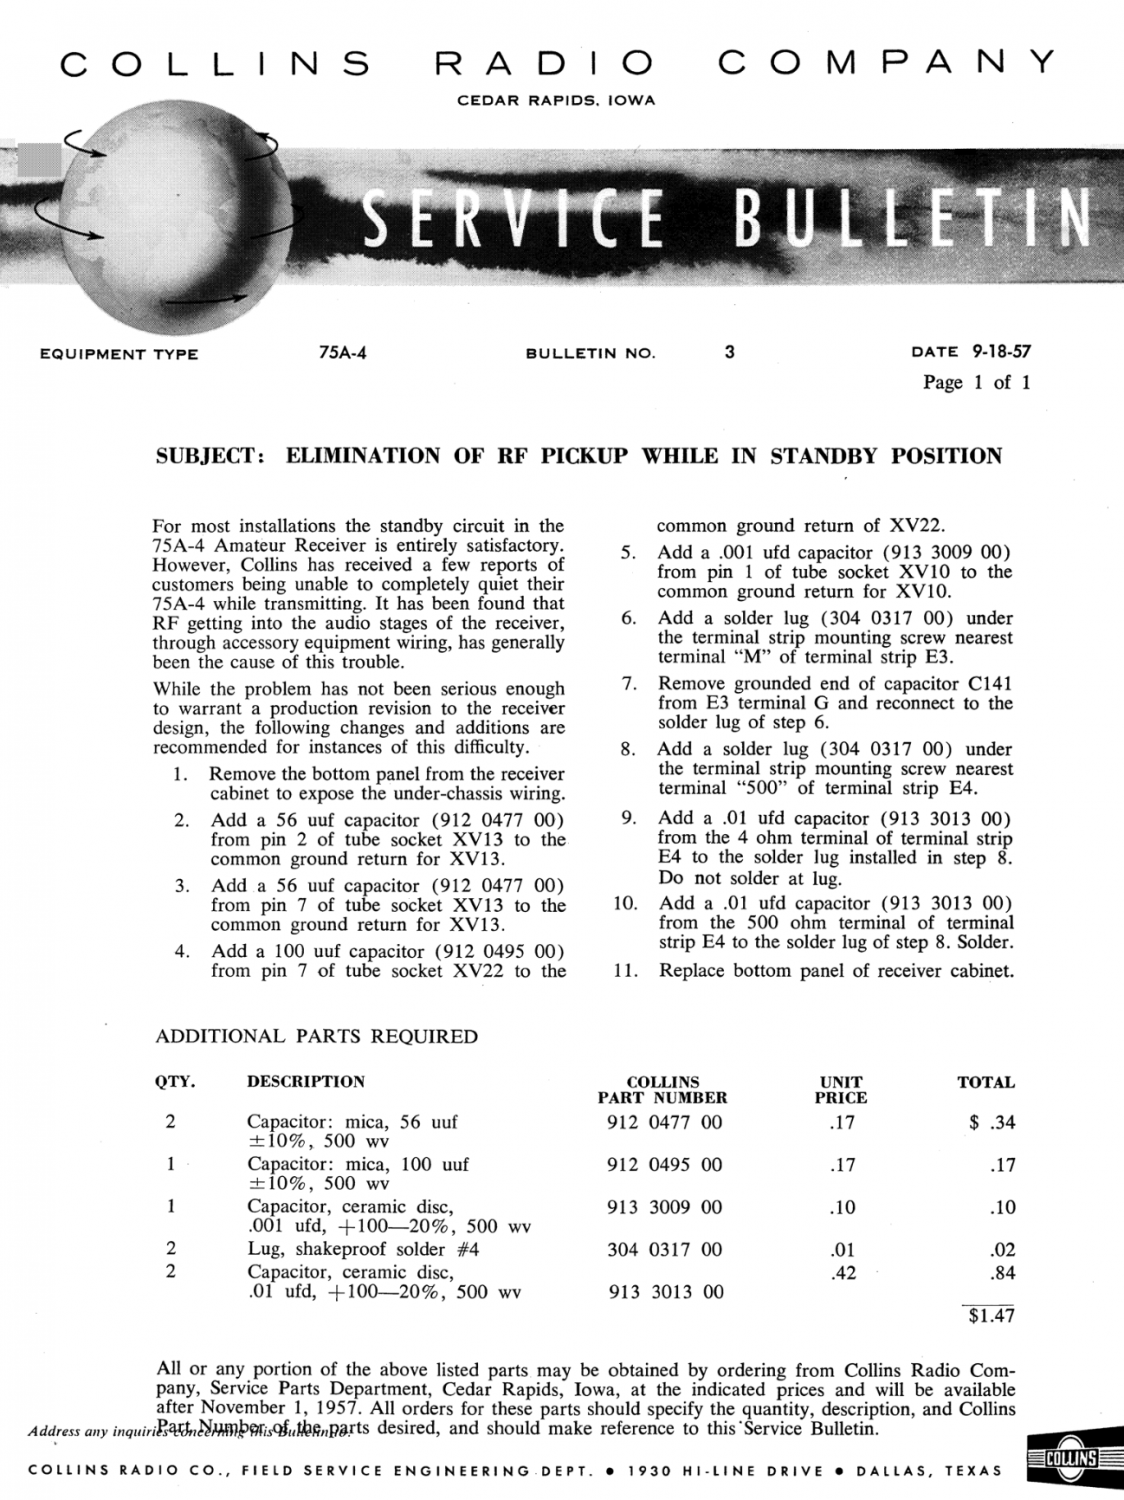 Collins 75A-4 Amateur Band Receiver - Service Bulletin Number 3 - (1957-09)